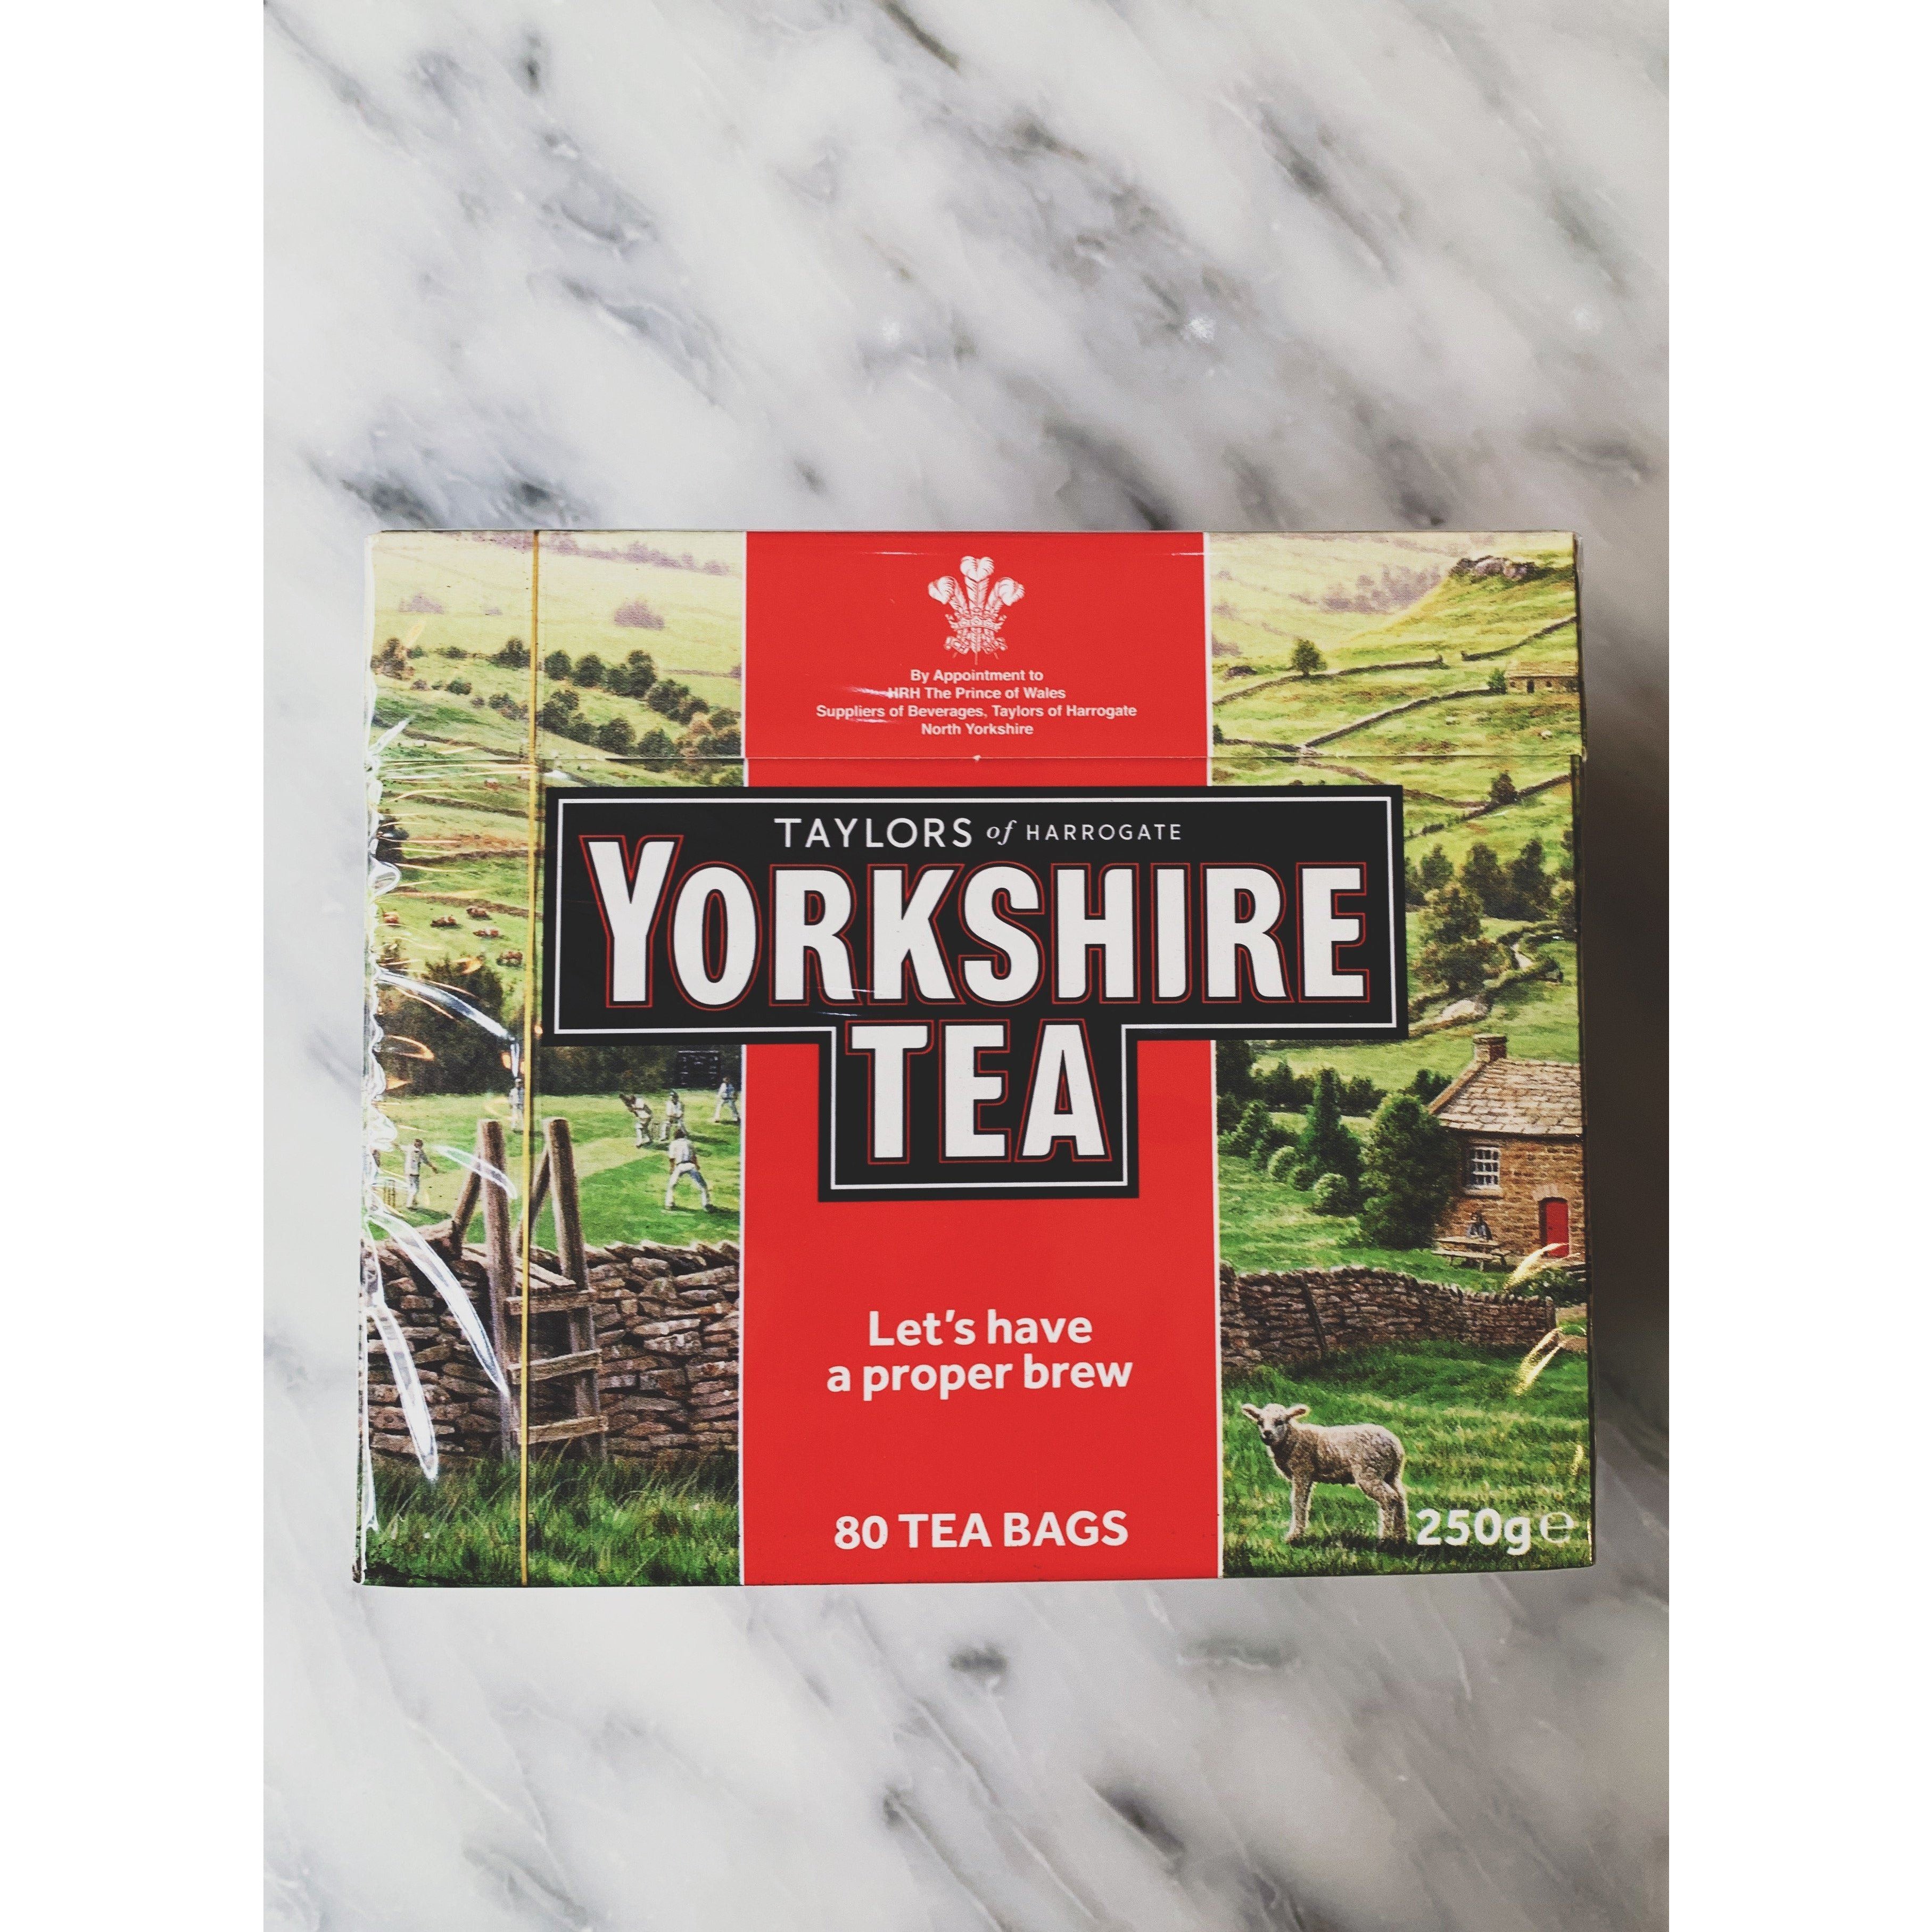  Yorkshire Tea